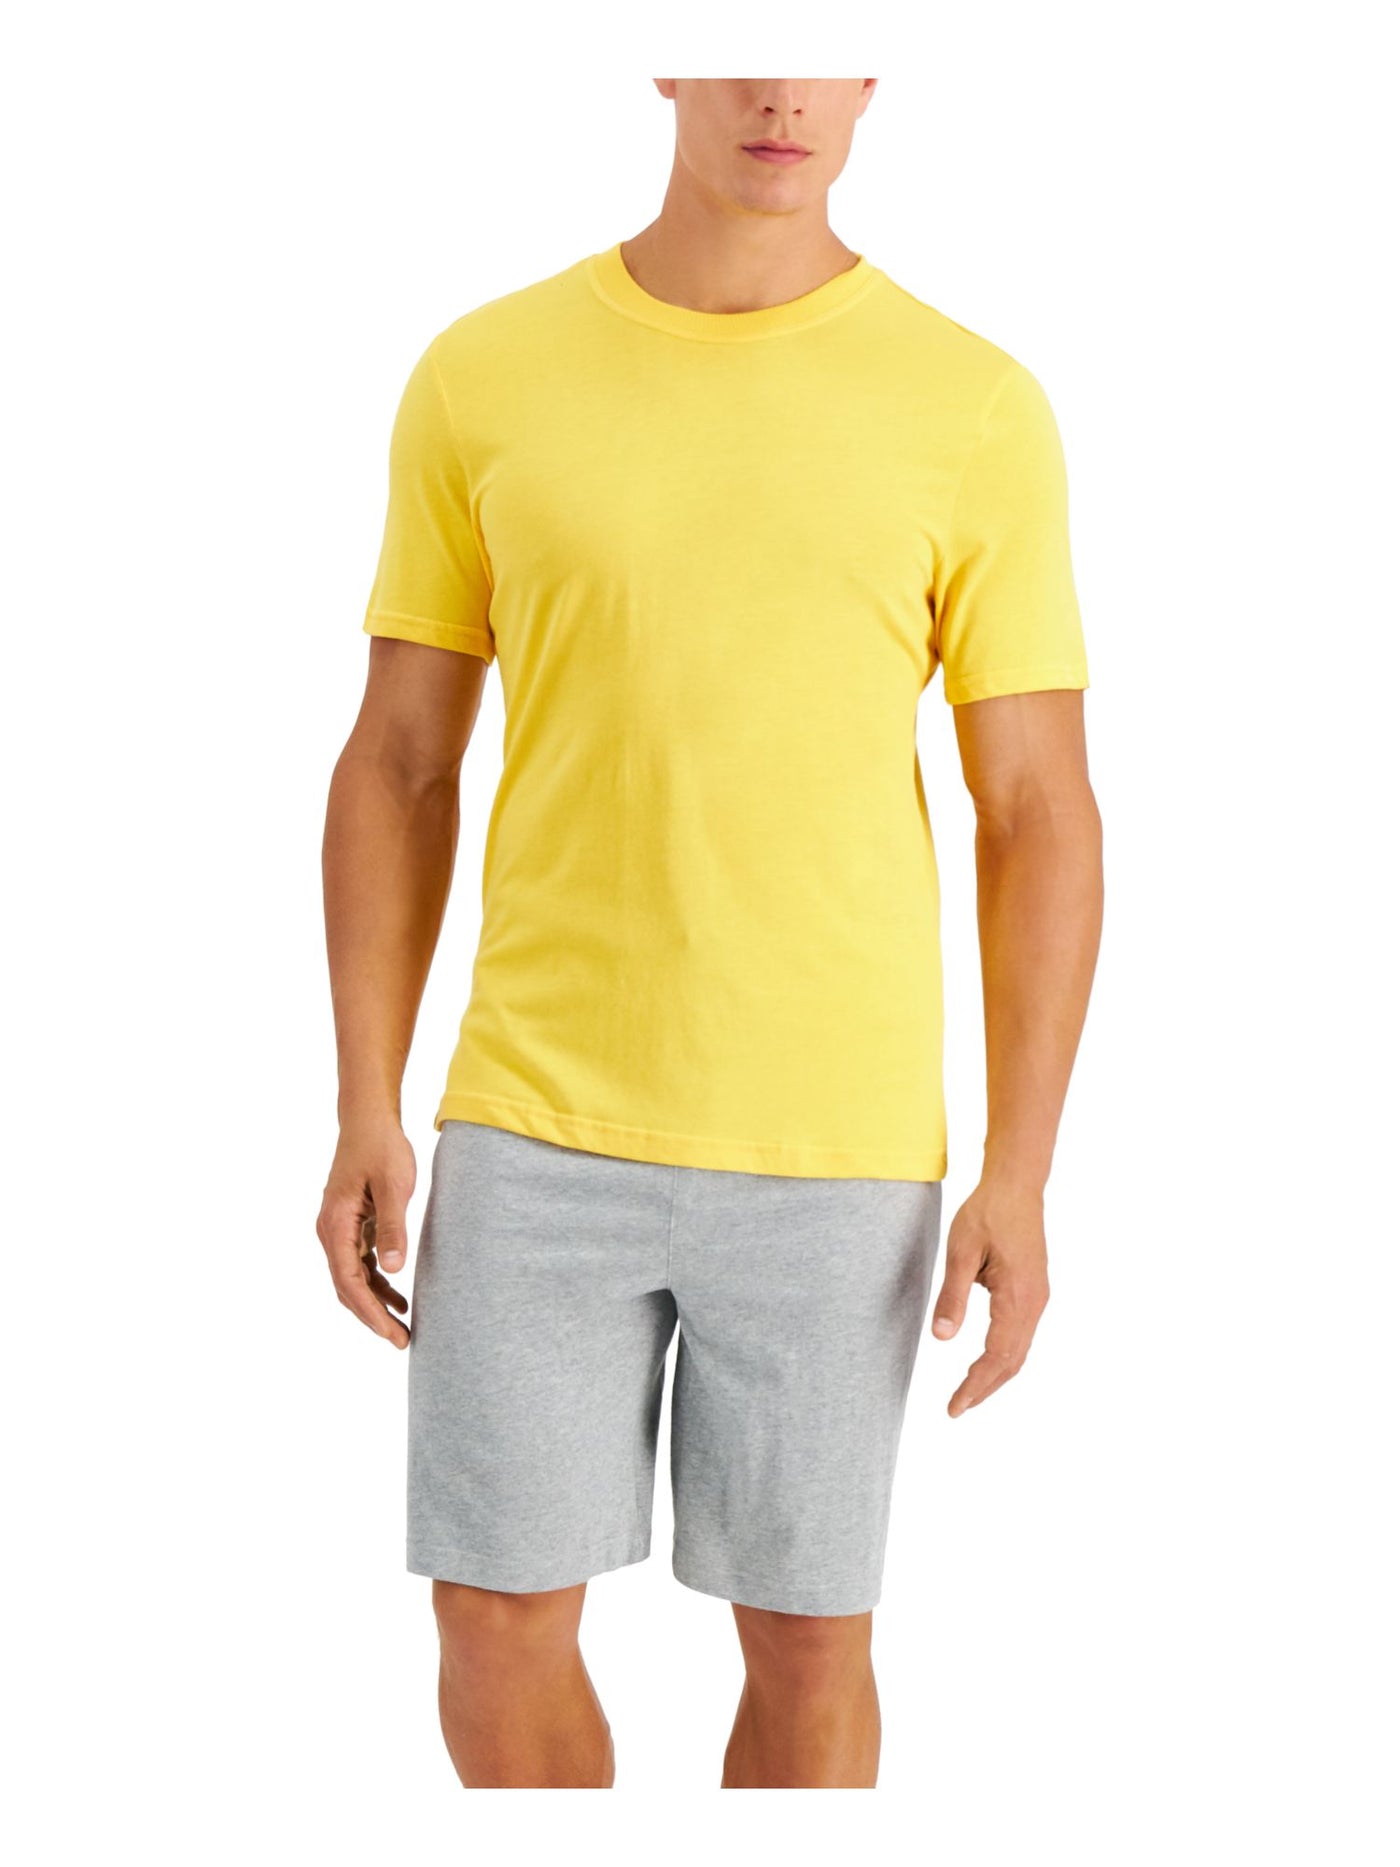 CLUBROOM Mens Yellow Drawstring Short Sleeve T-Shirt Top Shorts Pants Pajamas XXL